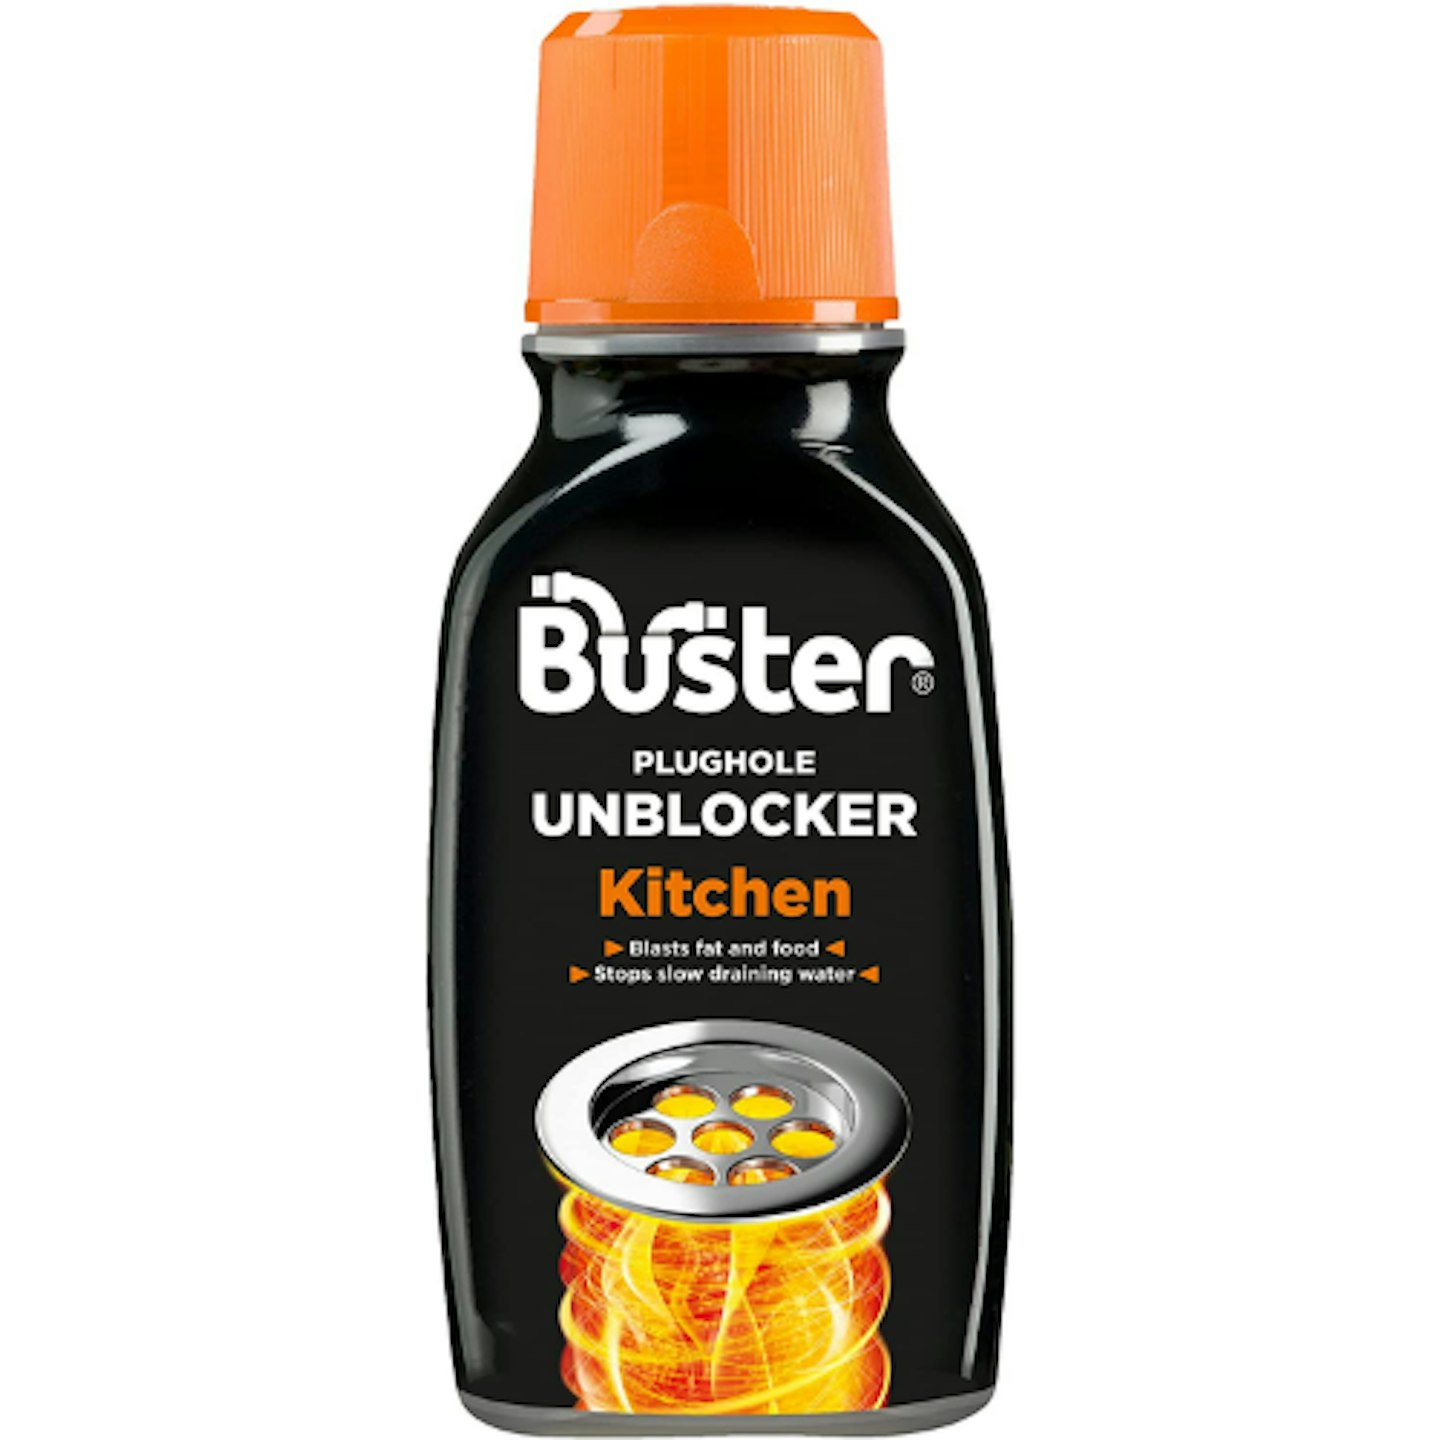 Buster Plughole Unblocker Kitchen